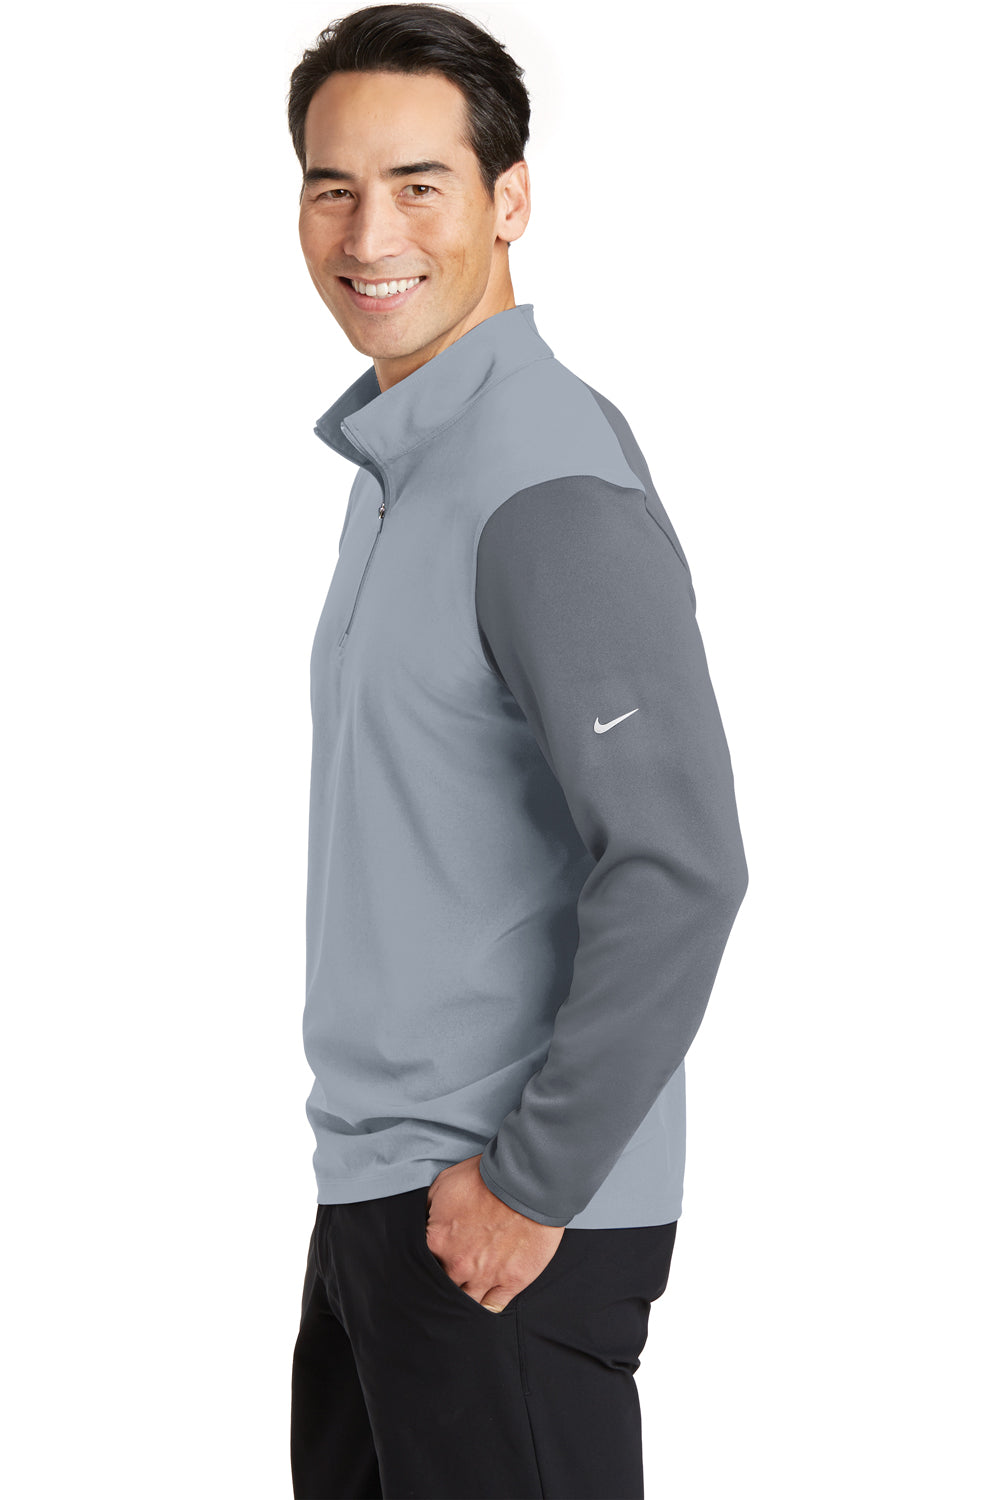 Nike 746102 Mens Dri-Fit Moisture Wicking 1/4 Zip Sweatshirt Cool Grey/Dark Grey Side